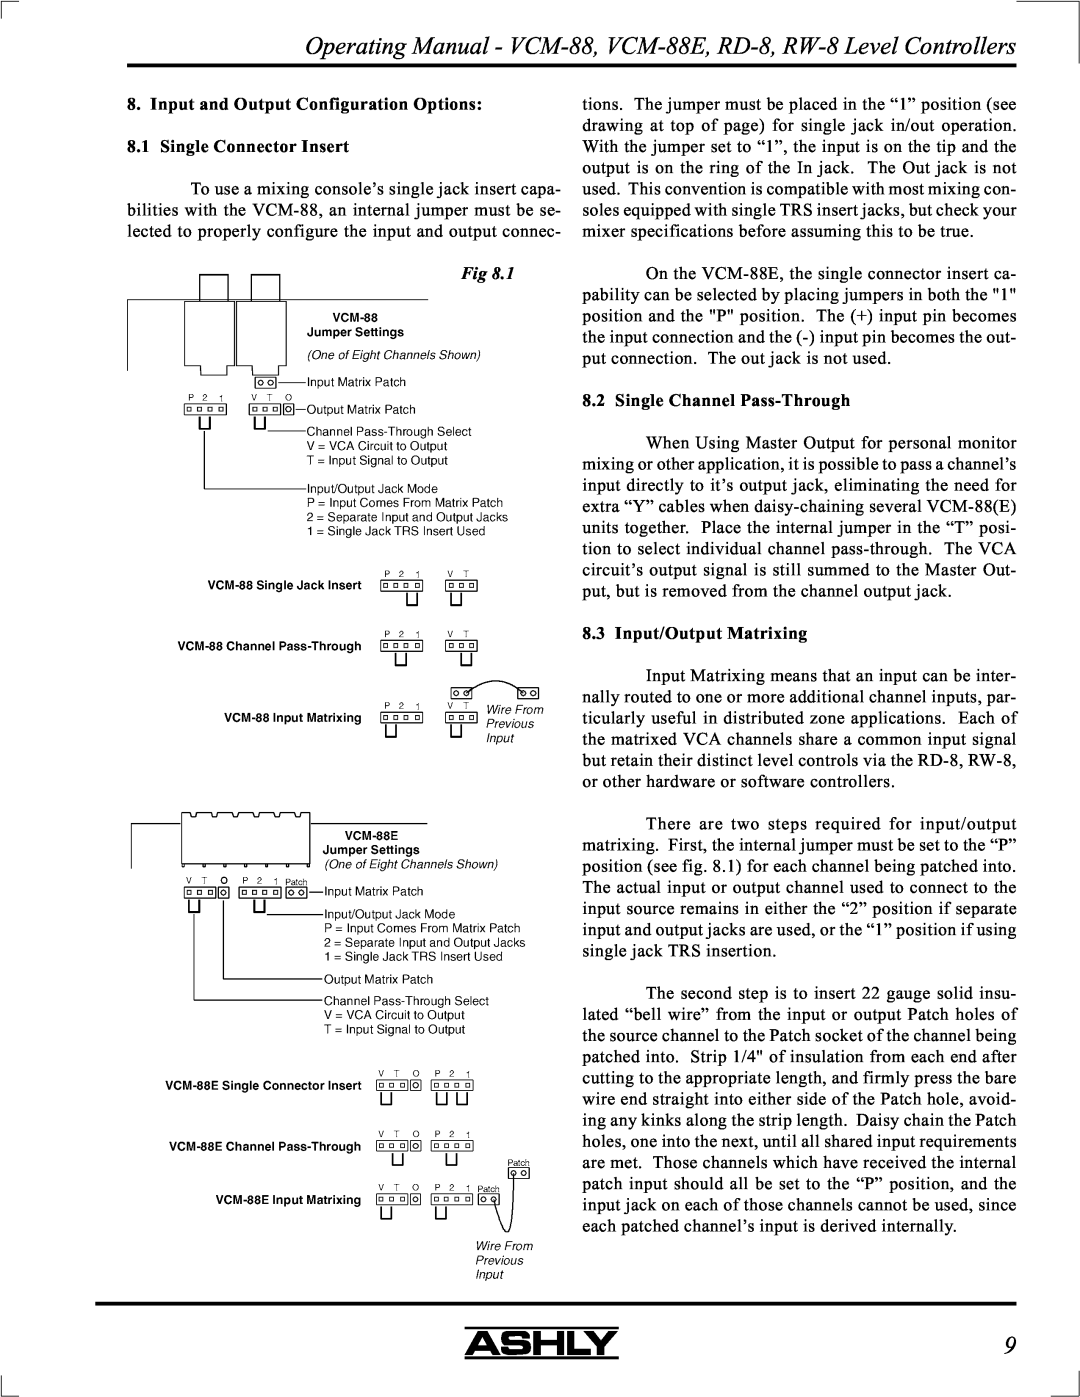 Ashly manual Operating Manual - VCM-88, VCM-88E, RD-8, RW-8 Level Controllers 